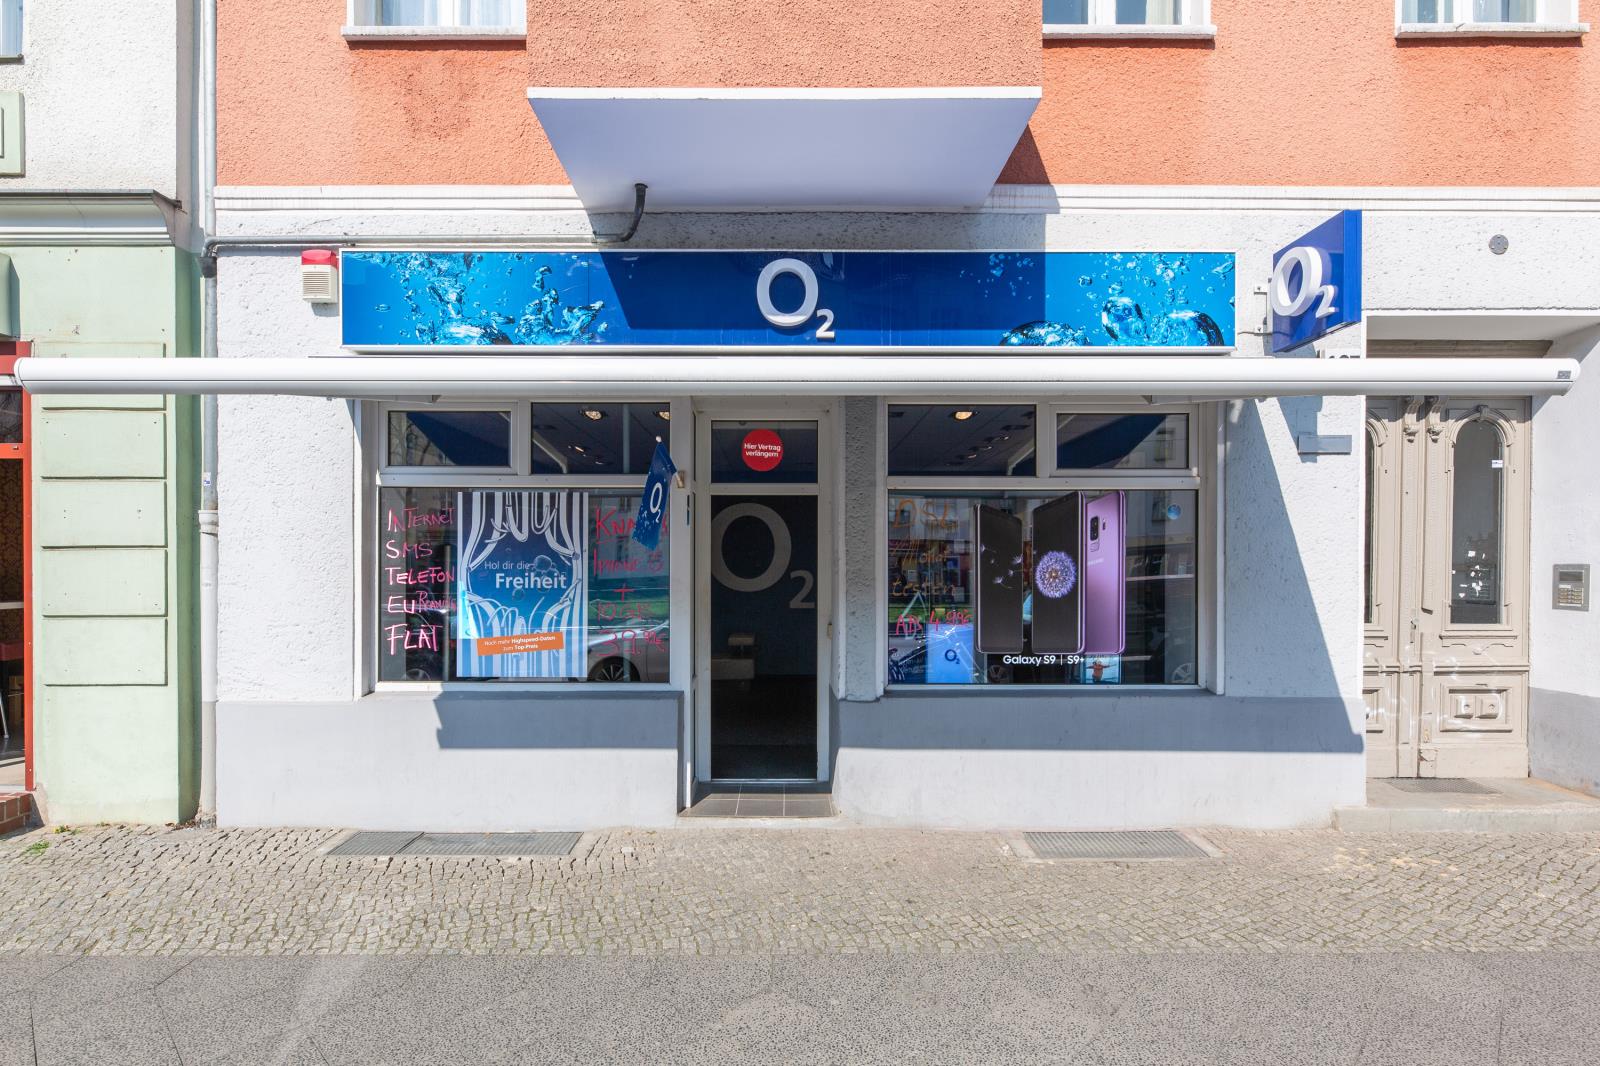 o2 Shop, Greifswalder Str. 197 in Berlin